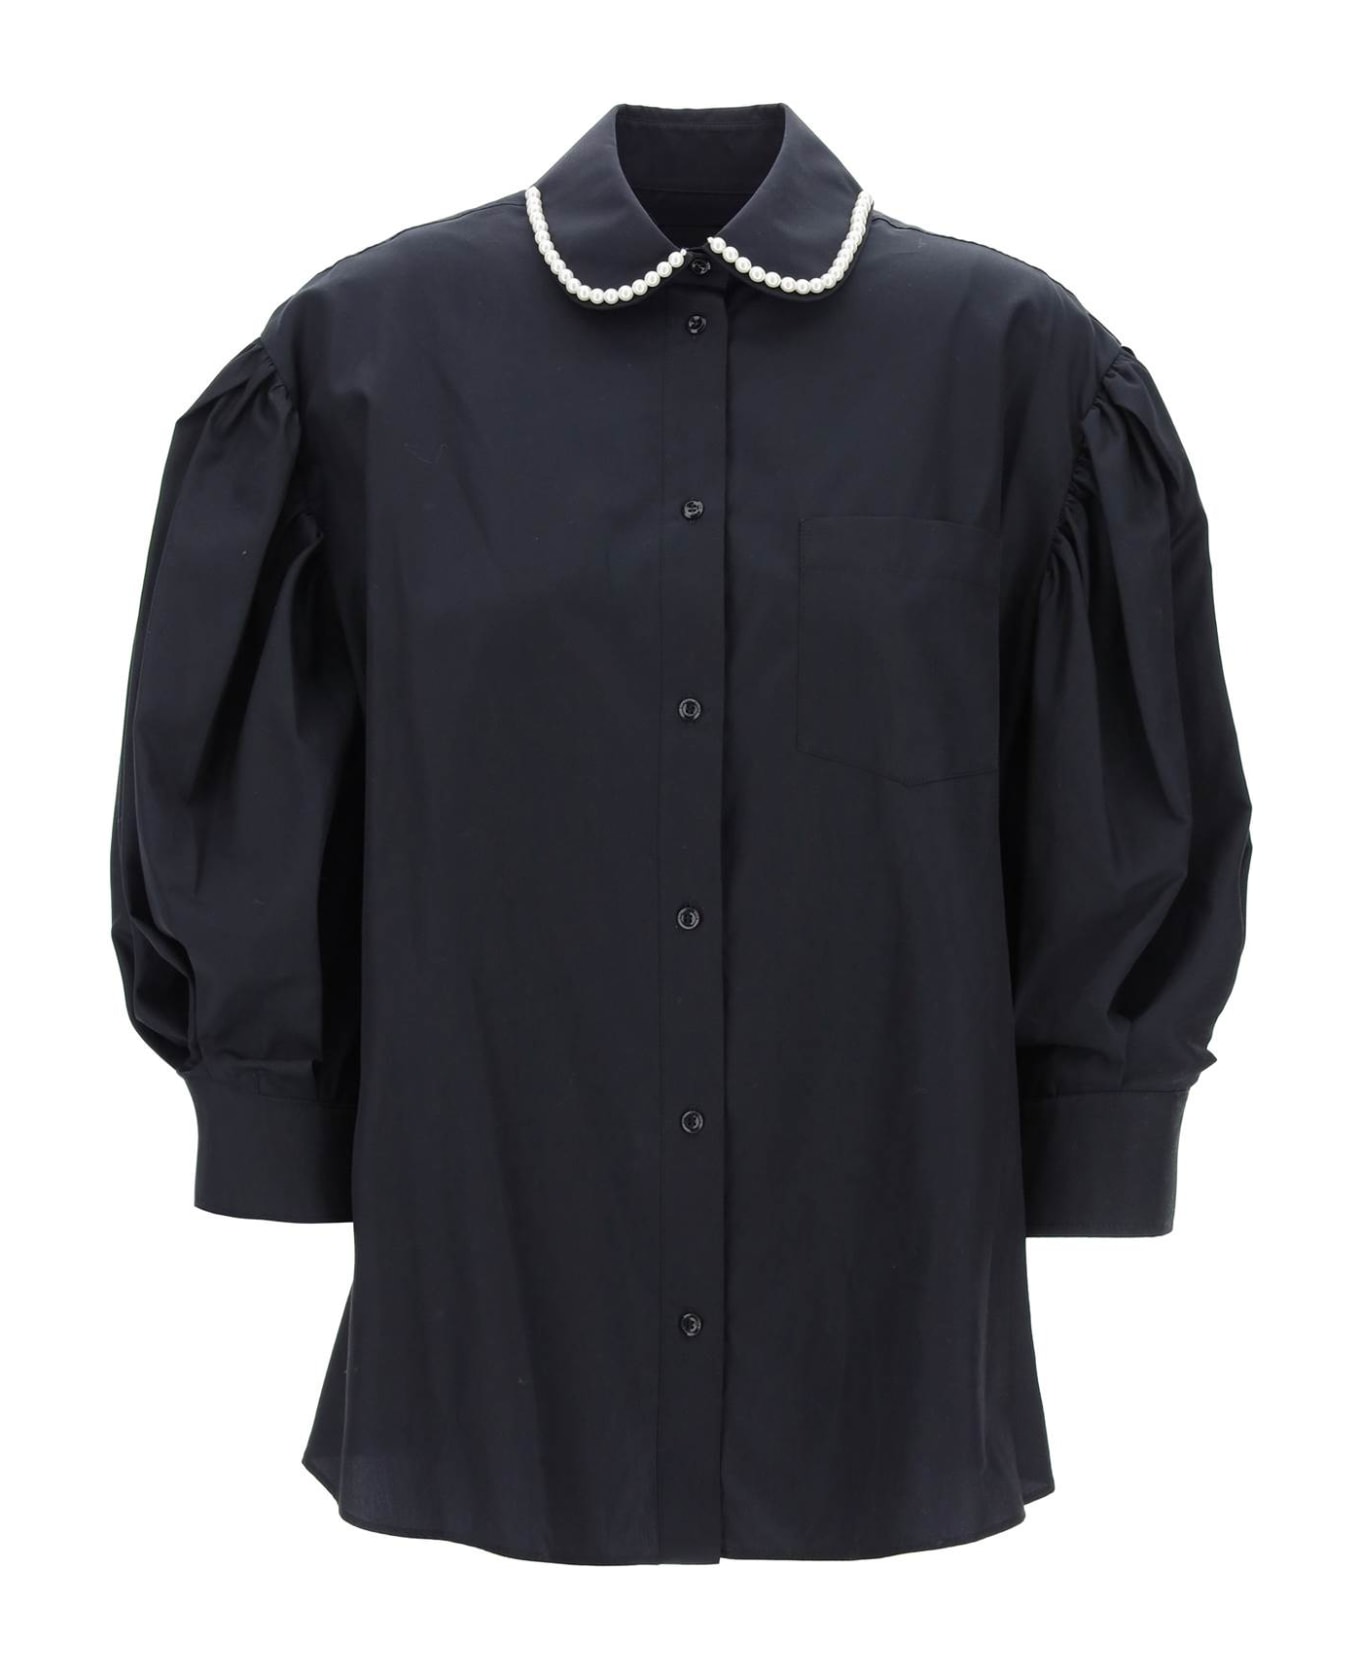 Simone Rocha Puff Sleeve Shirt With Embellishment - BLACK PEARL (Black)